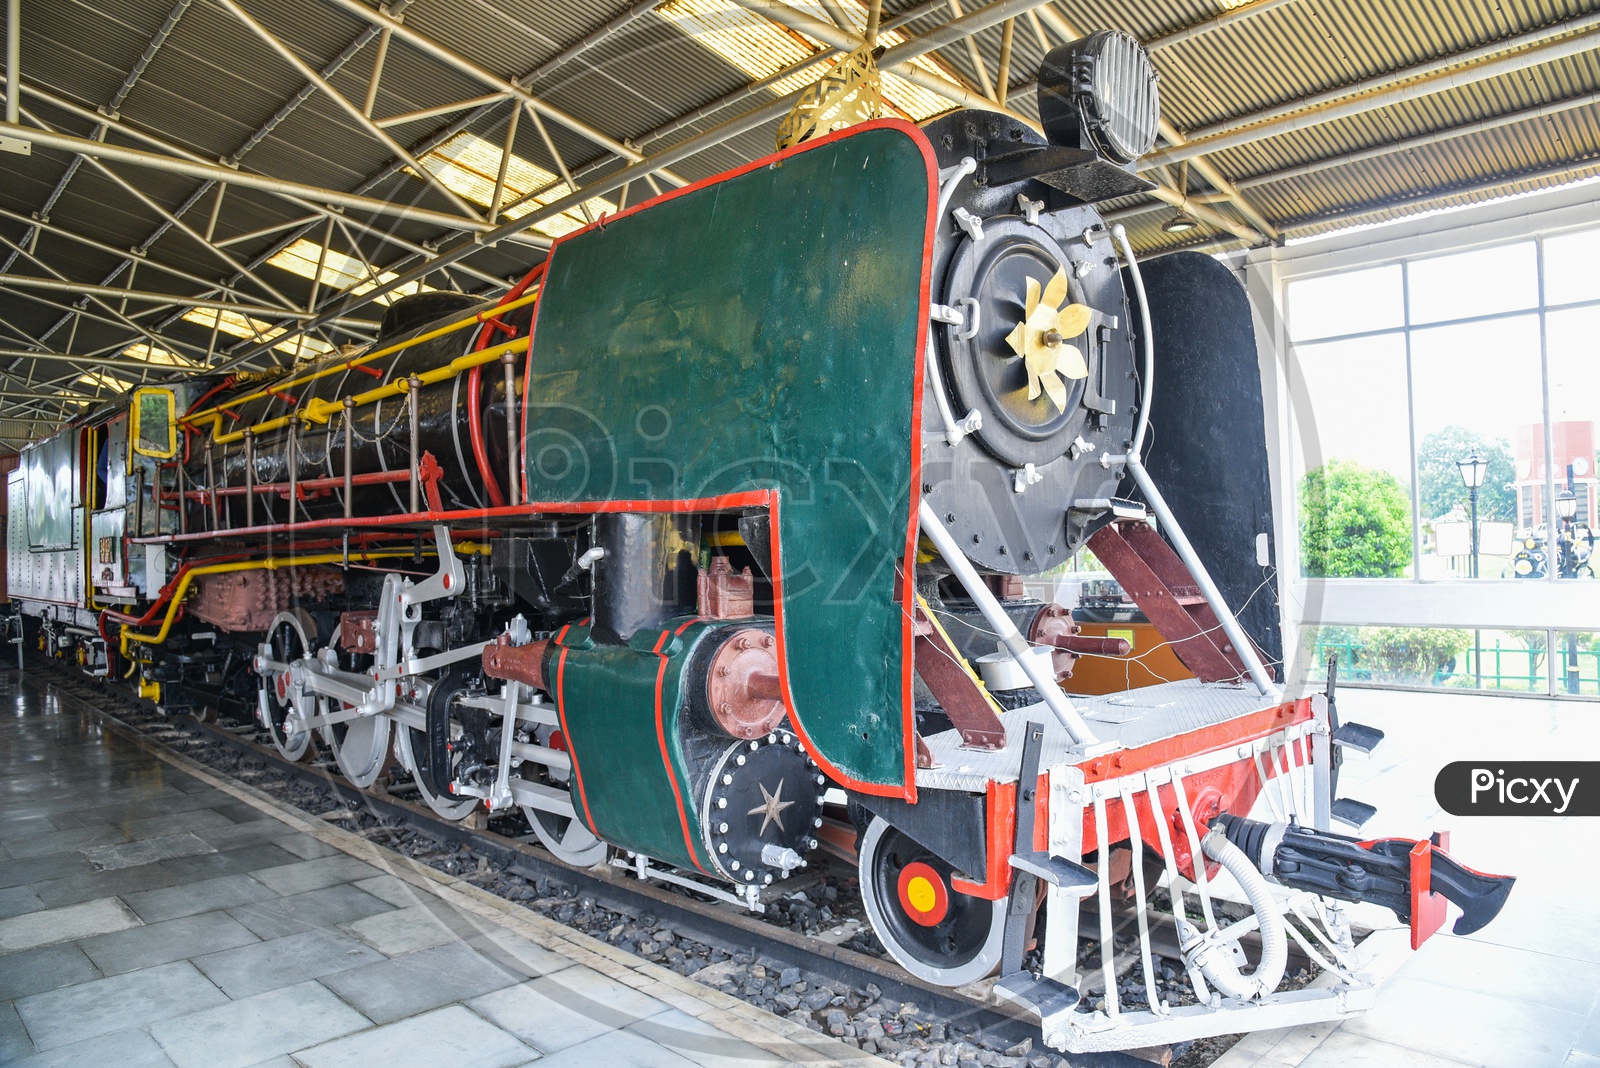 Old antique Rail Engine Bogies in display At Rail Museum